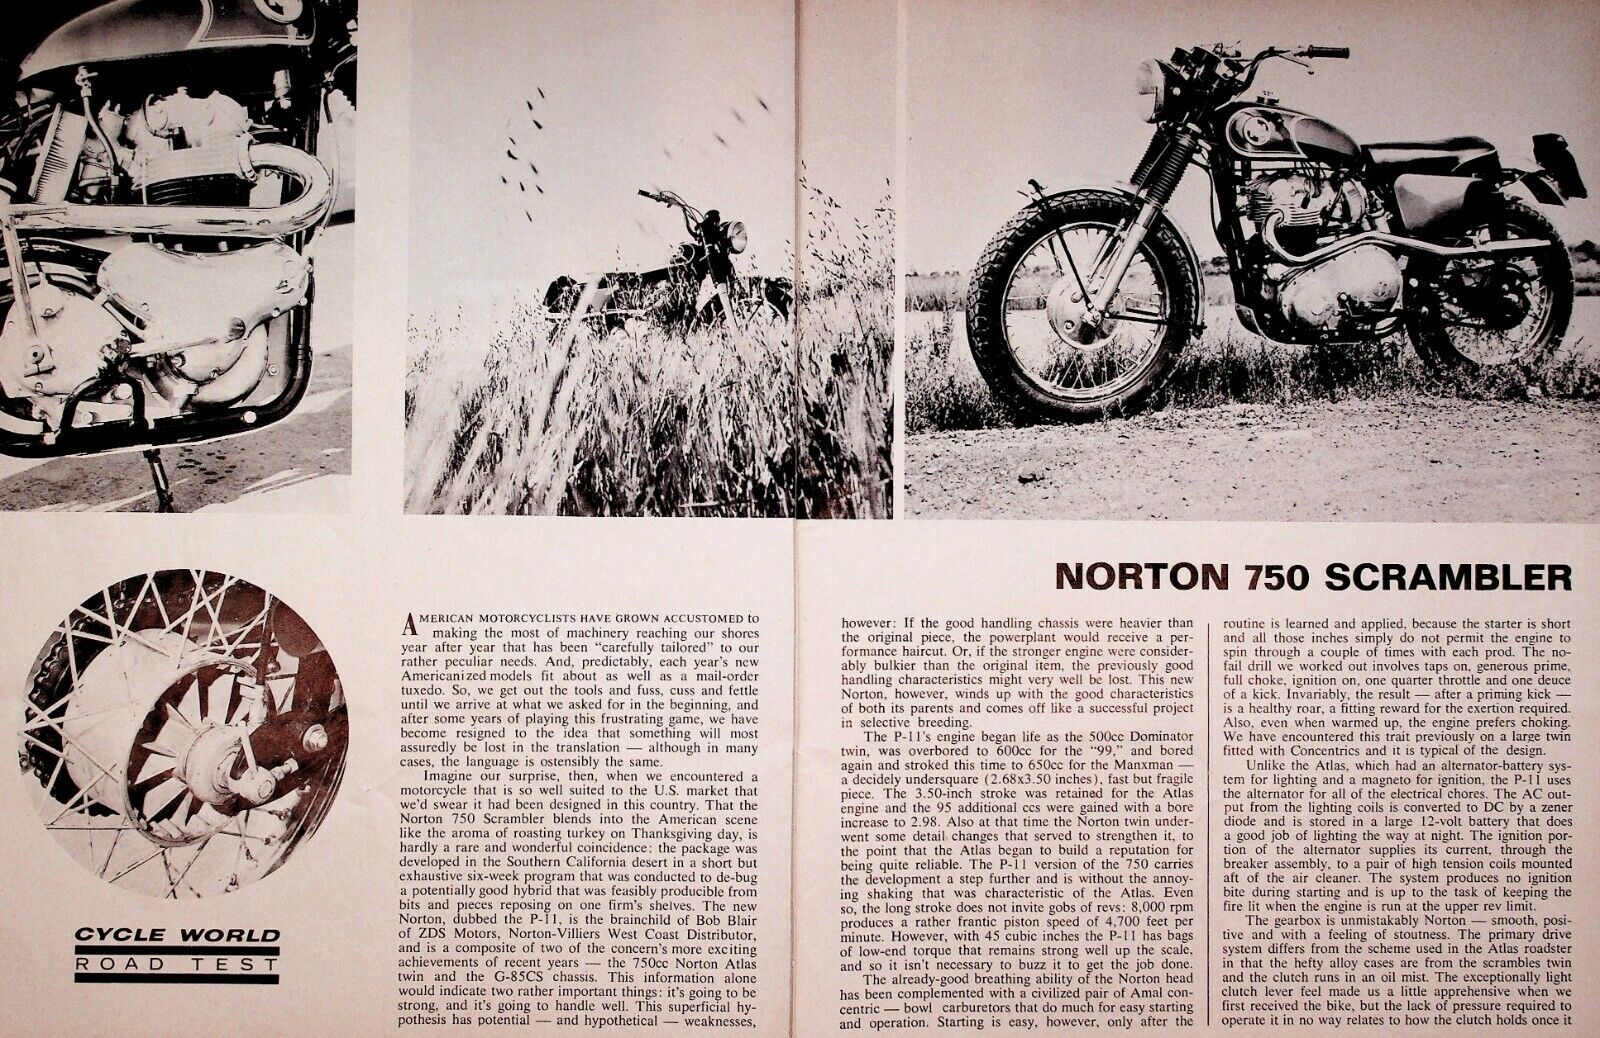 1967 Norton 750 Scrambler - 4-Page Vintage Motorcycle Road Test Article